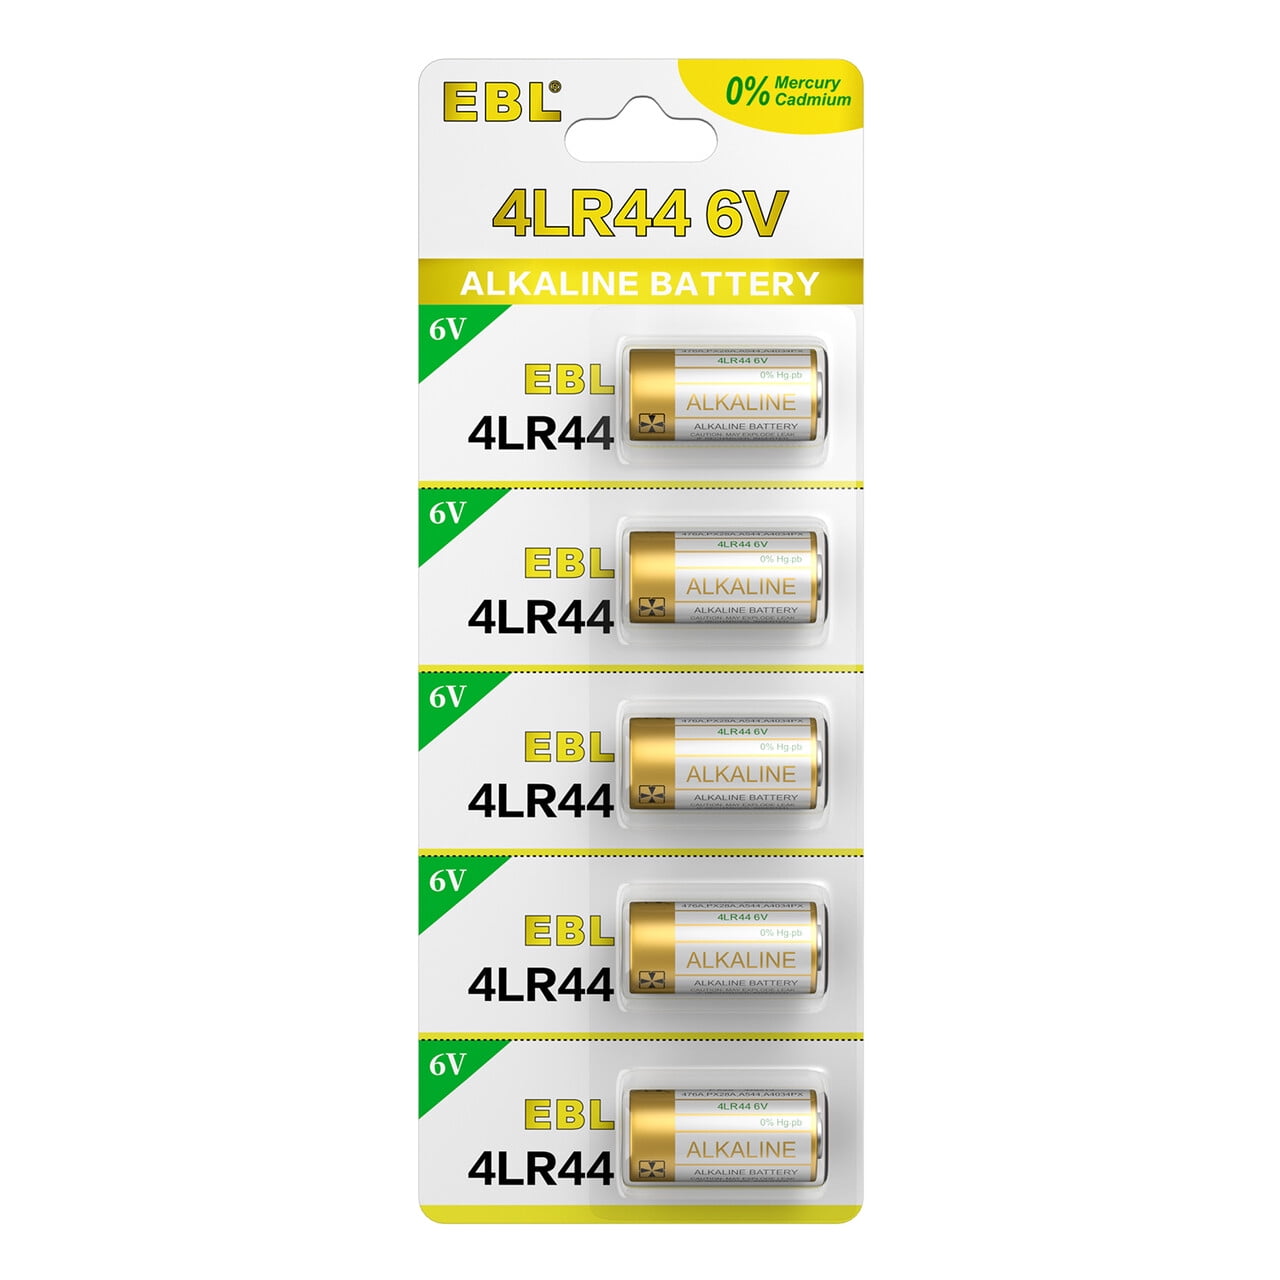 20 x 4lr44 6v Alkaline Batteries px28 l1325 BRANDED Eunicell 4g13 476a 